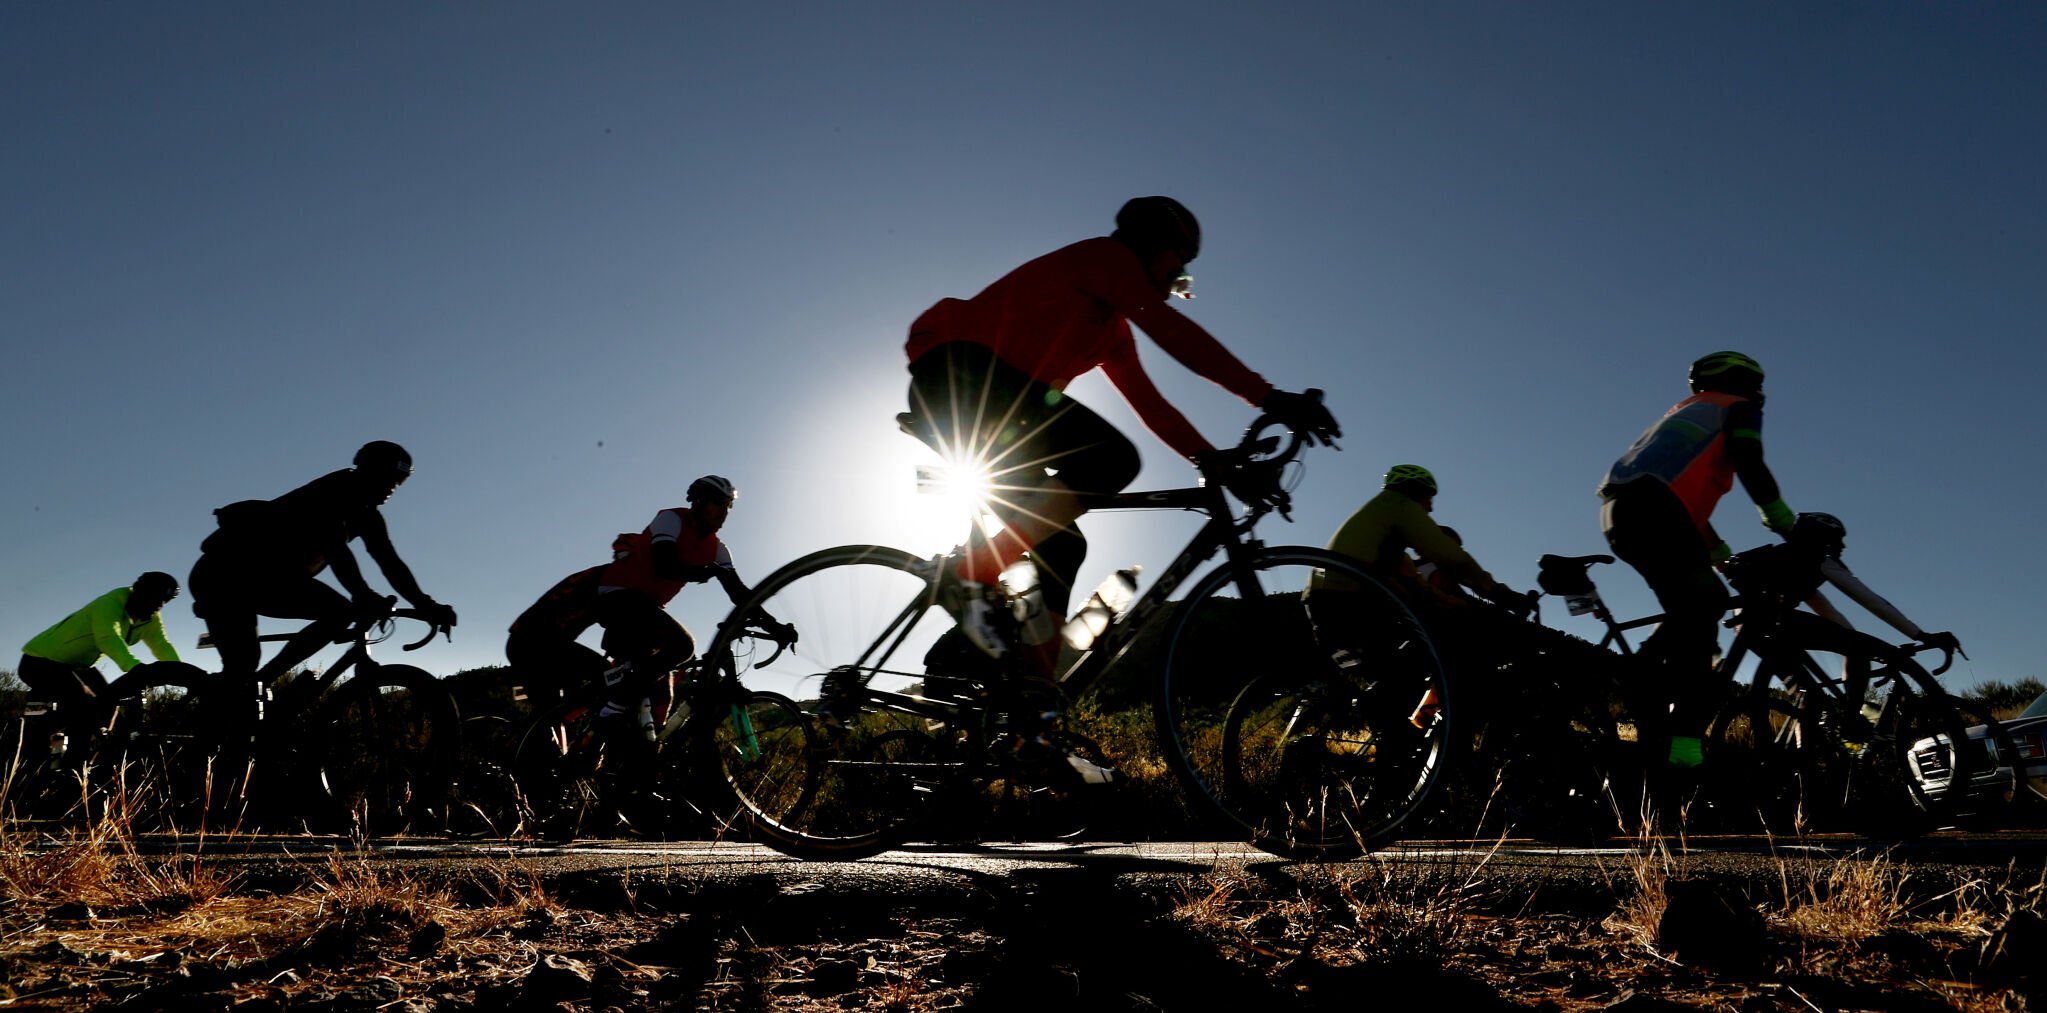 Photographs 2022 El Tour de Tucson bicycle race in Tucson Arizona